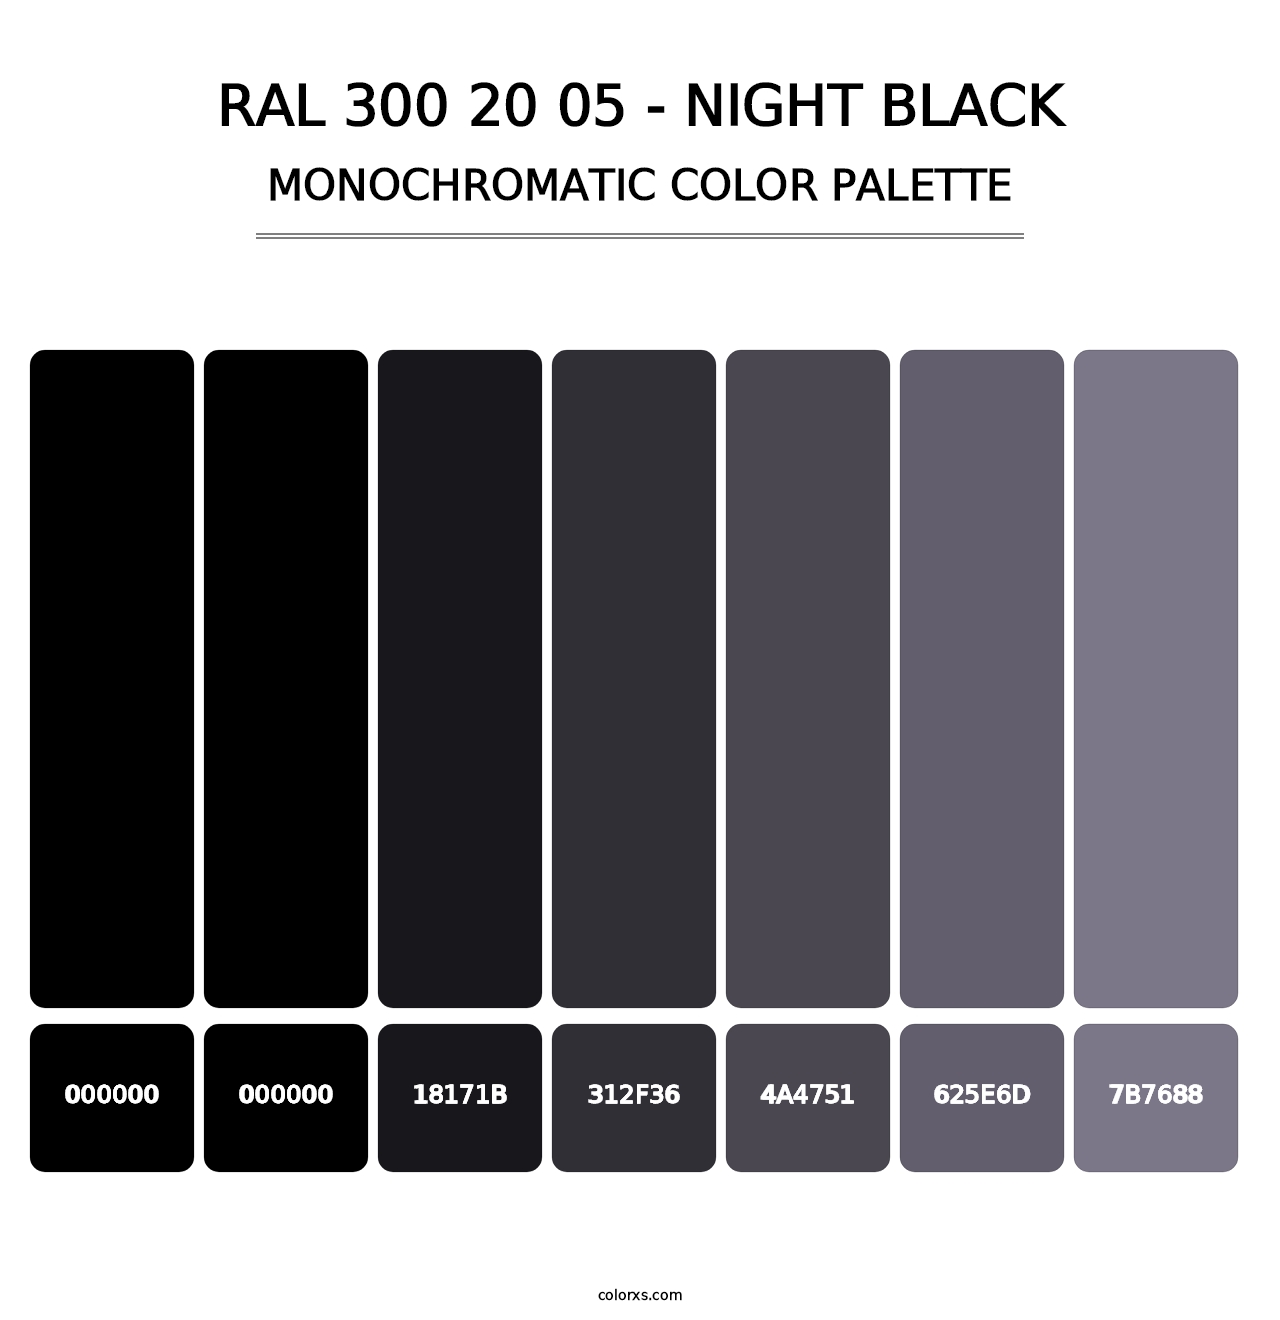 RAL 300 20 05 - Night Black - Monochromatic Color Palette